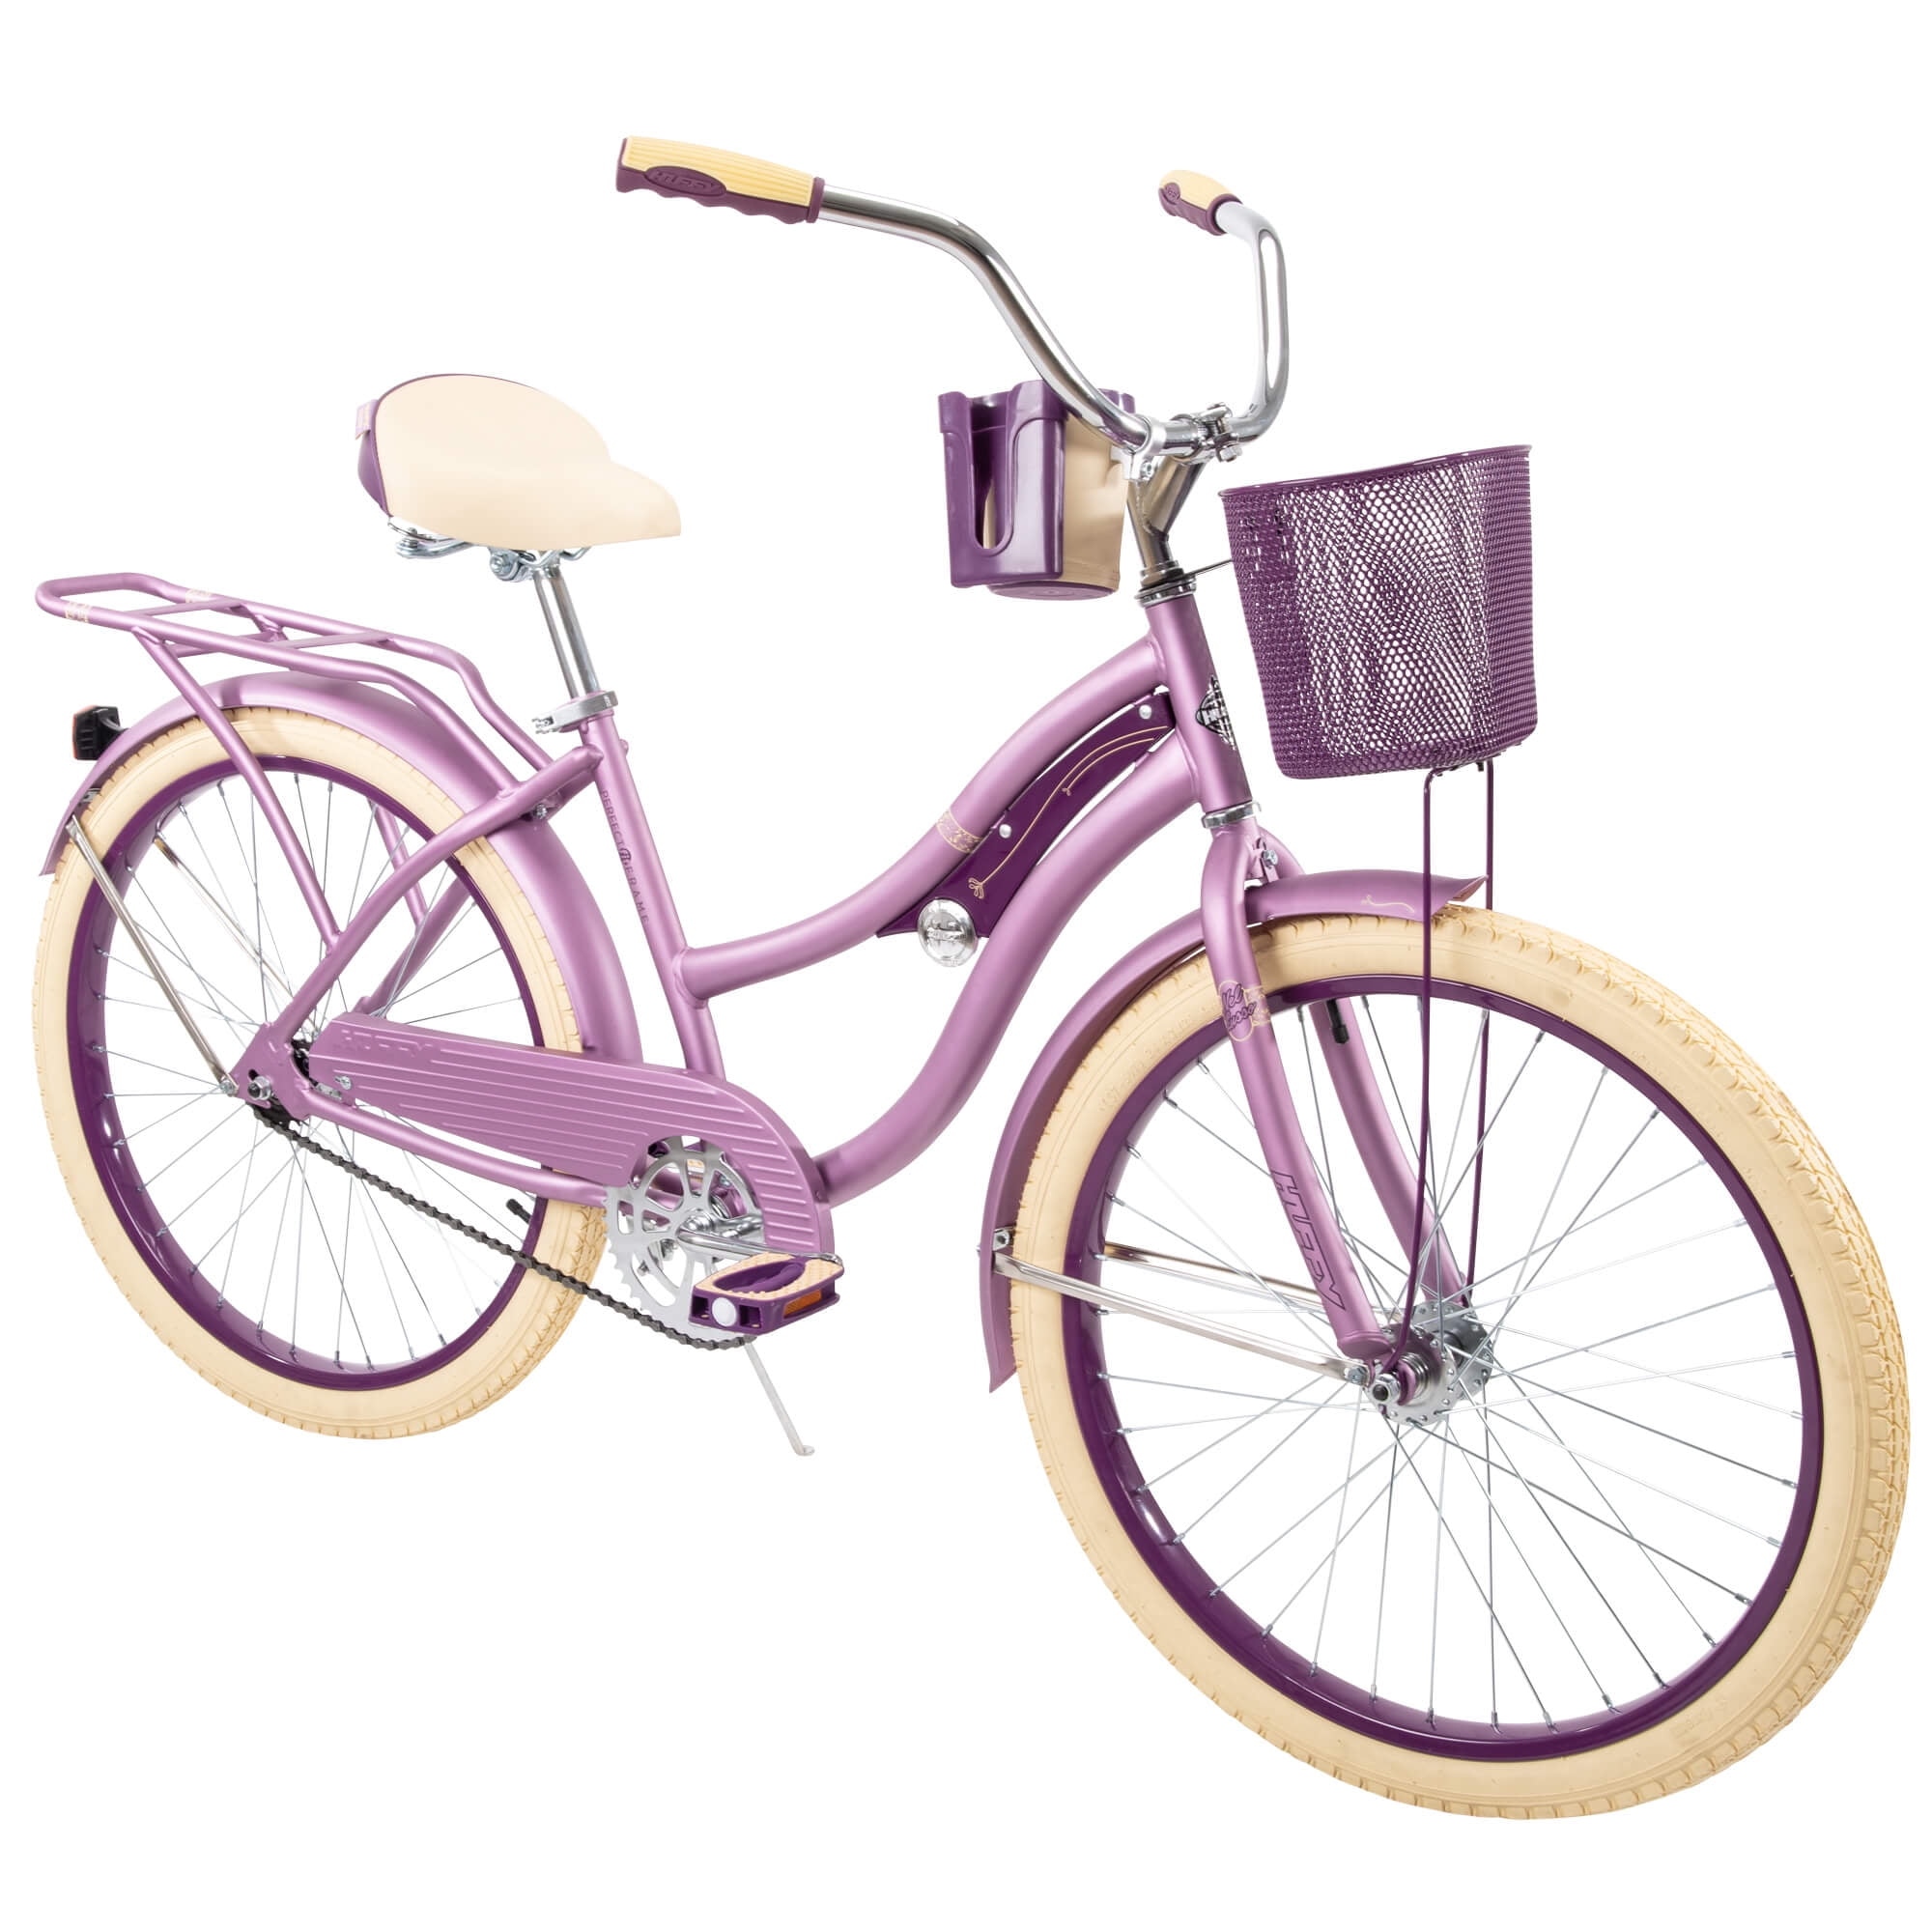 Huffy 24" Nel Lusso Girls' Cruiser Bike Pink/Purple FAST FREE SHIPPING BRAND NEW 